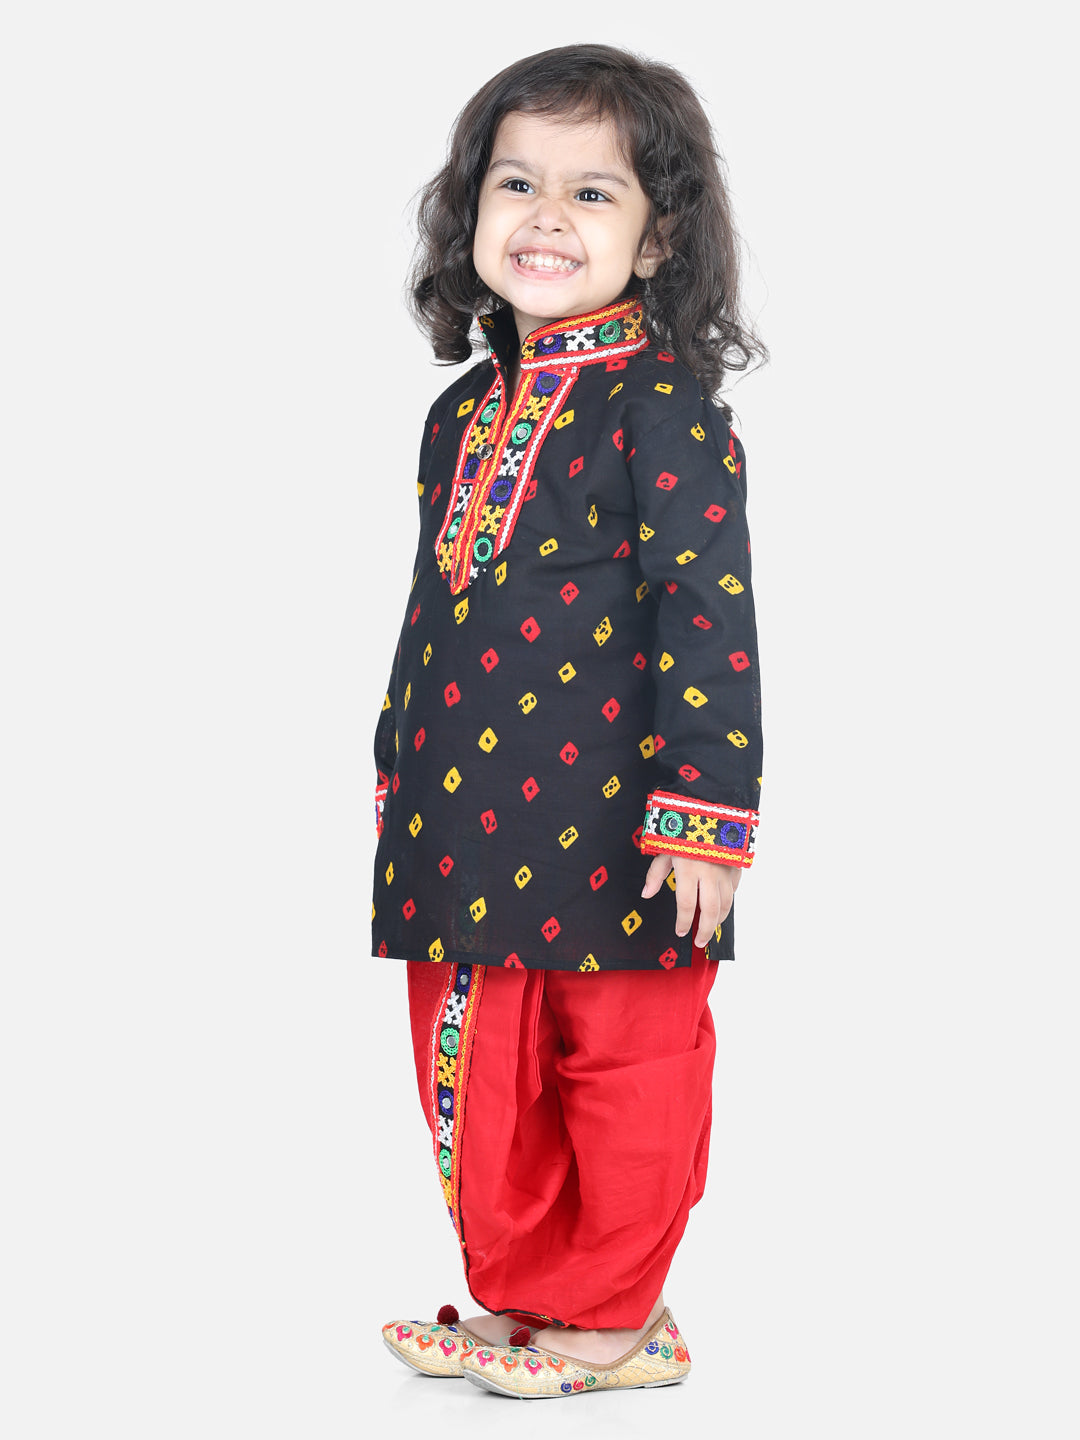 Bandhani Print Cotton Full Sleeve Dhoti Kurta For Boys andBlack Halter Neck Choli With Dhoti For Girls-Black